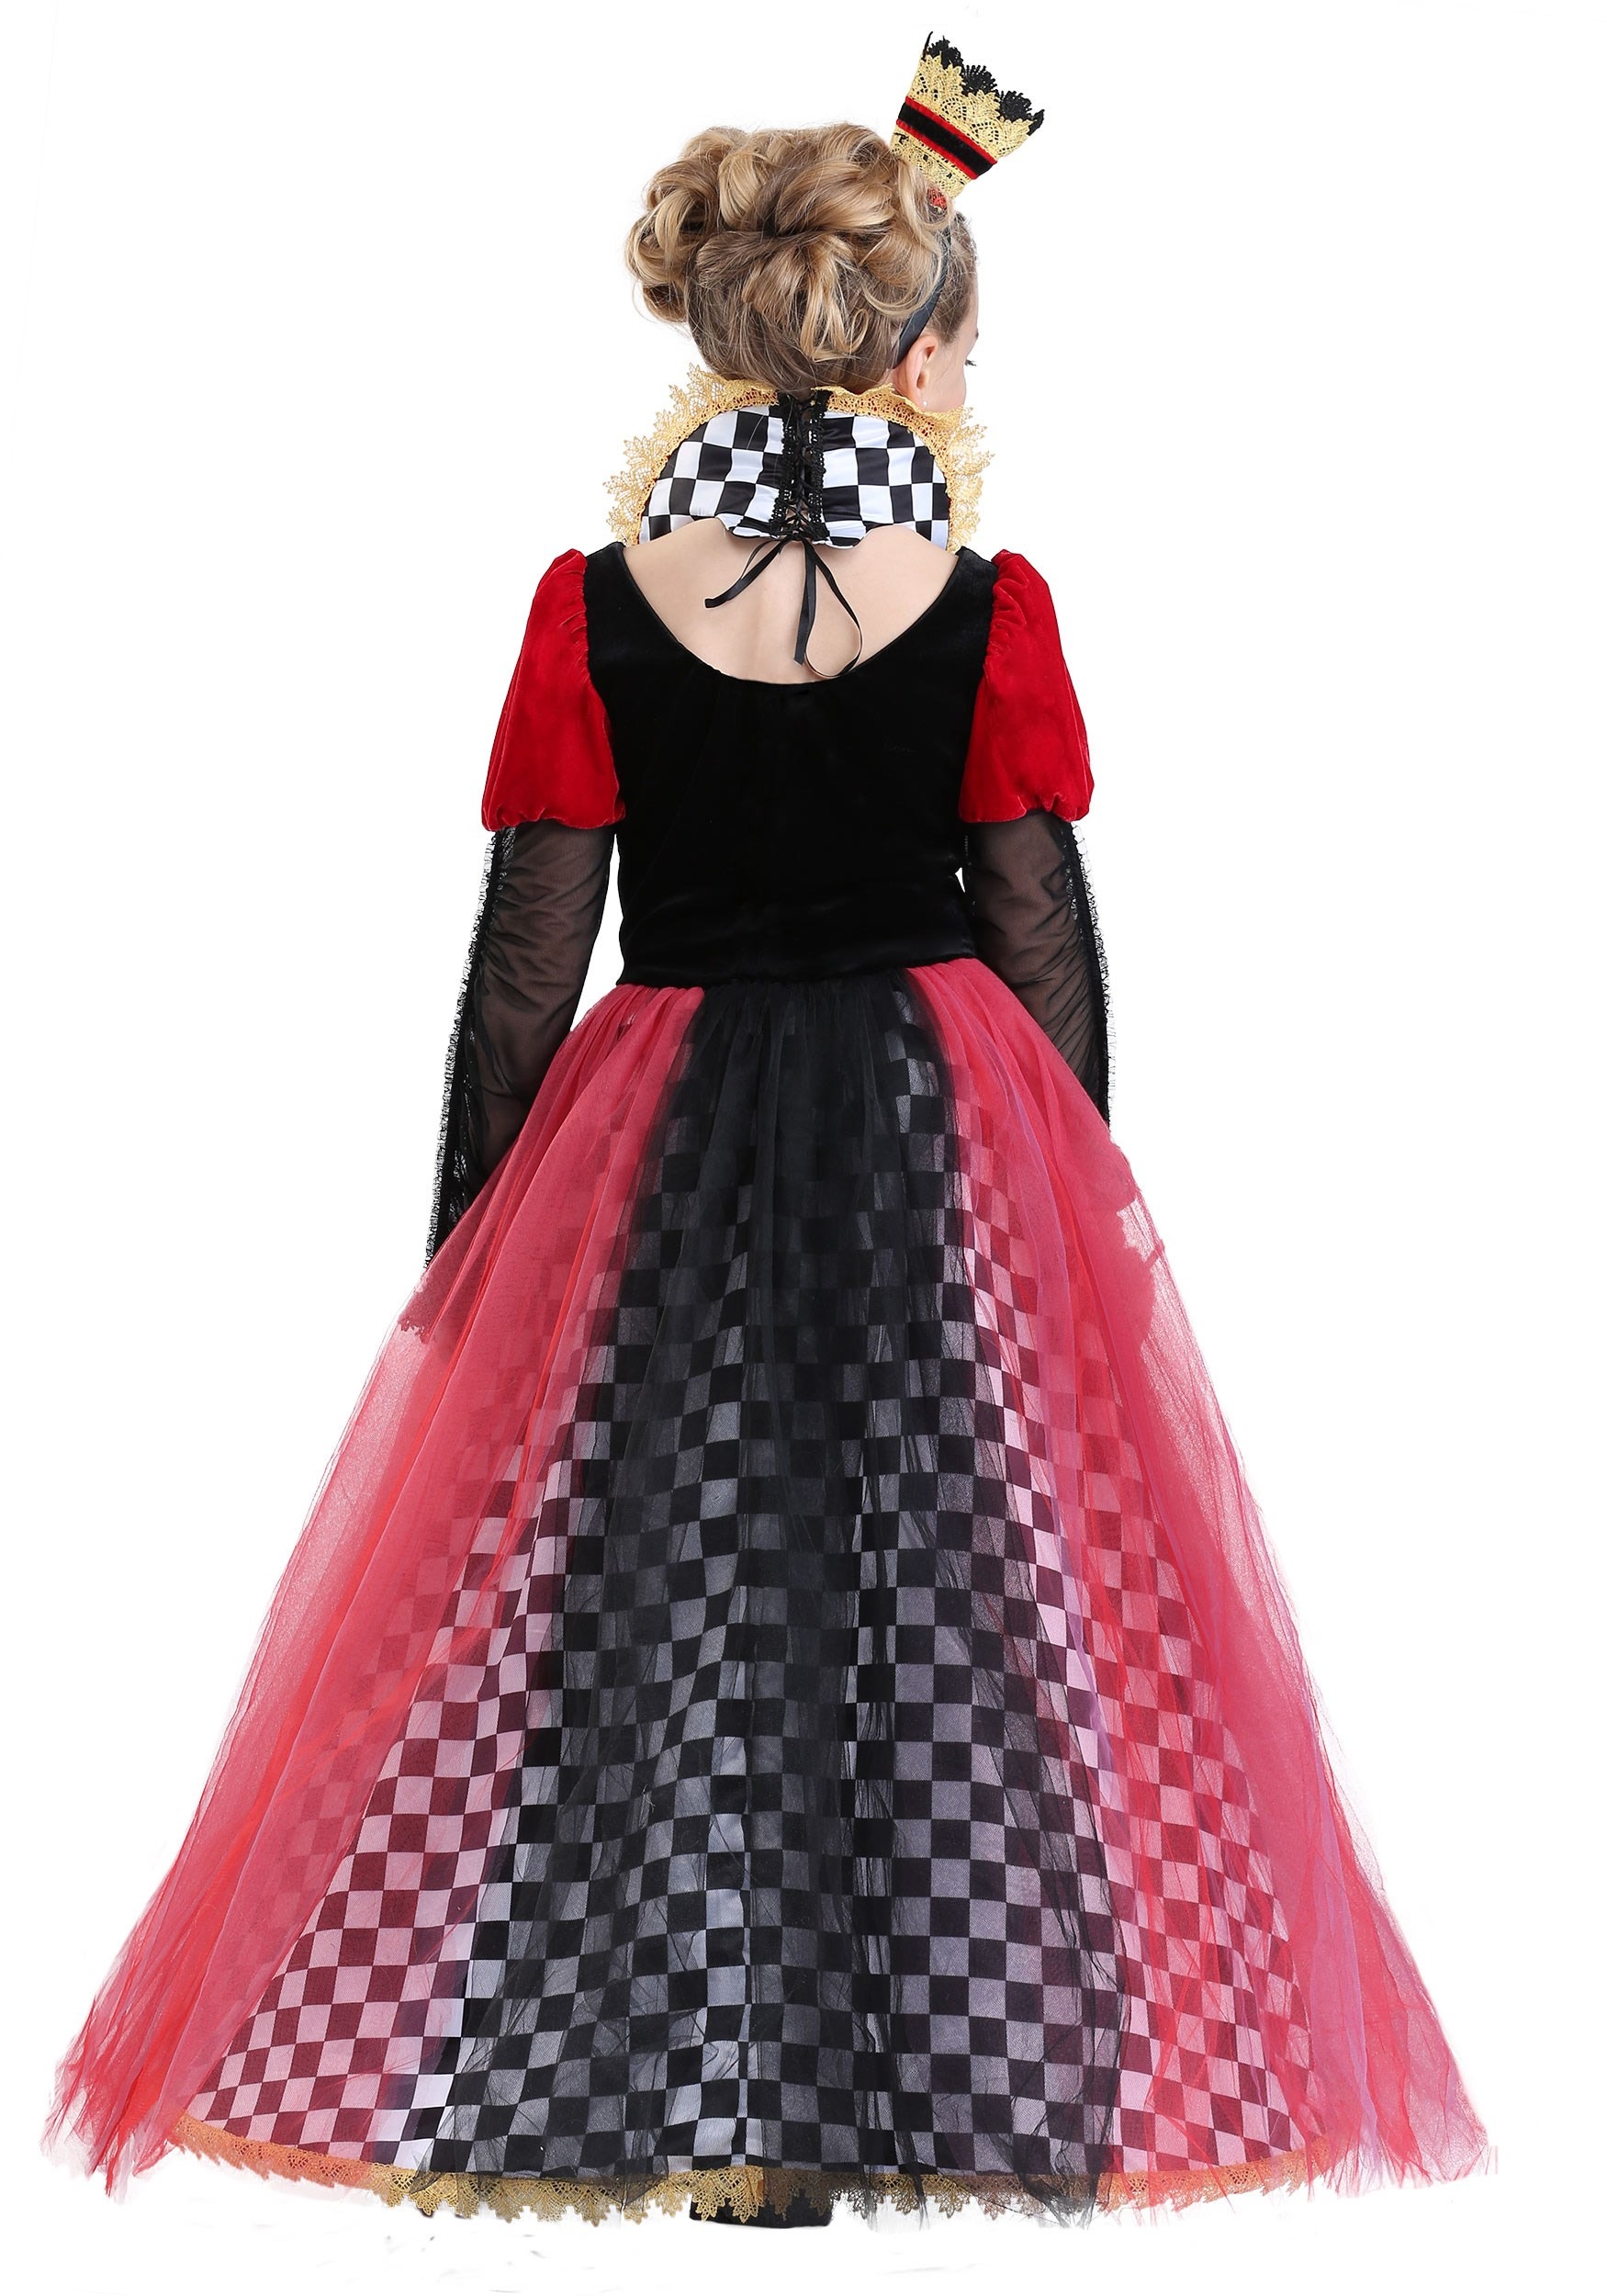 Ravishing Queen of Hearts Costume for Girls